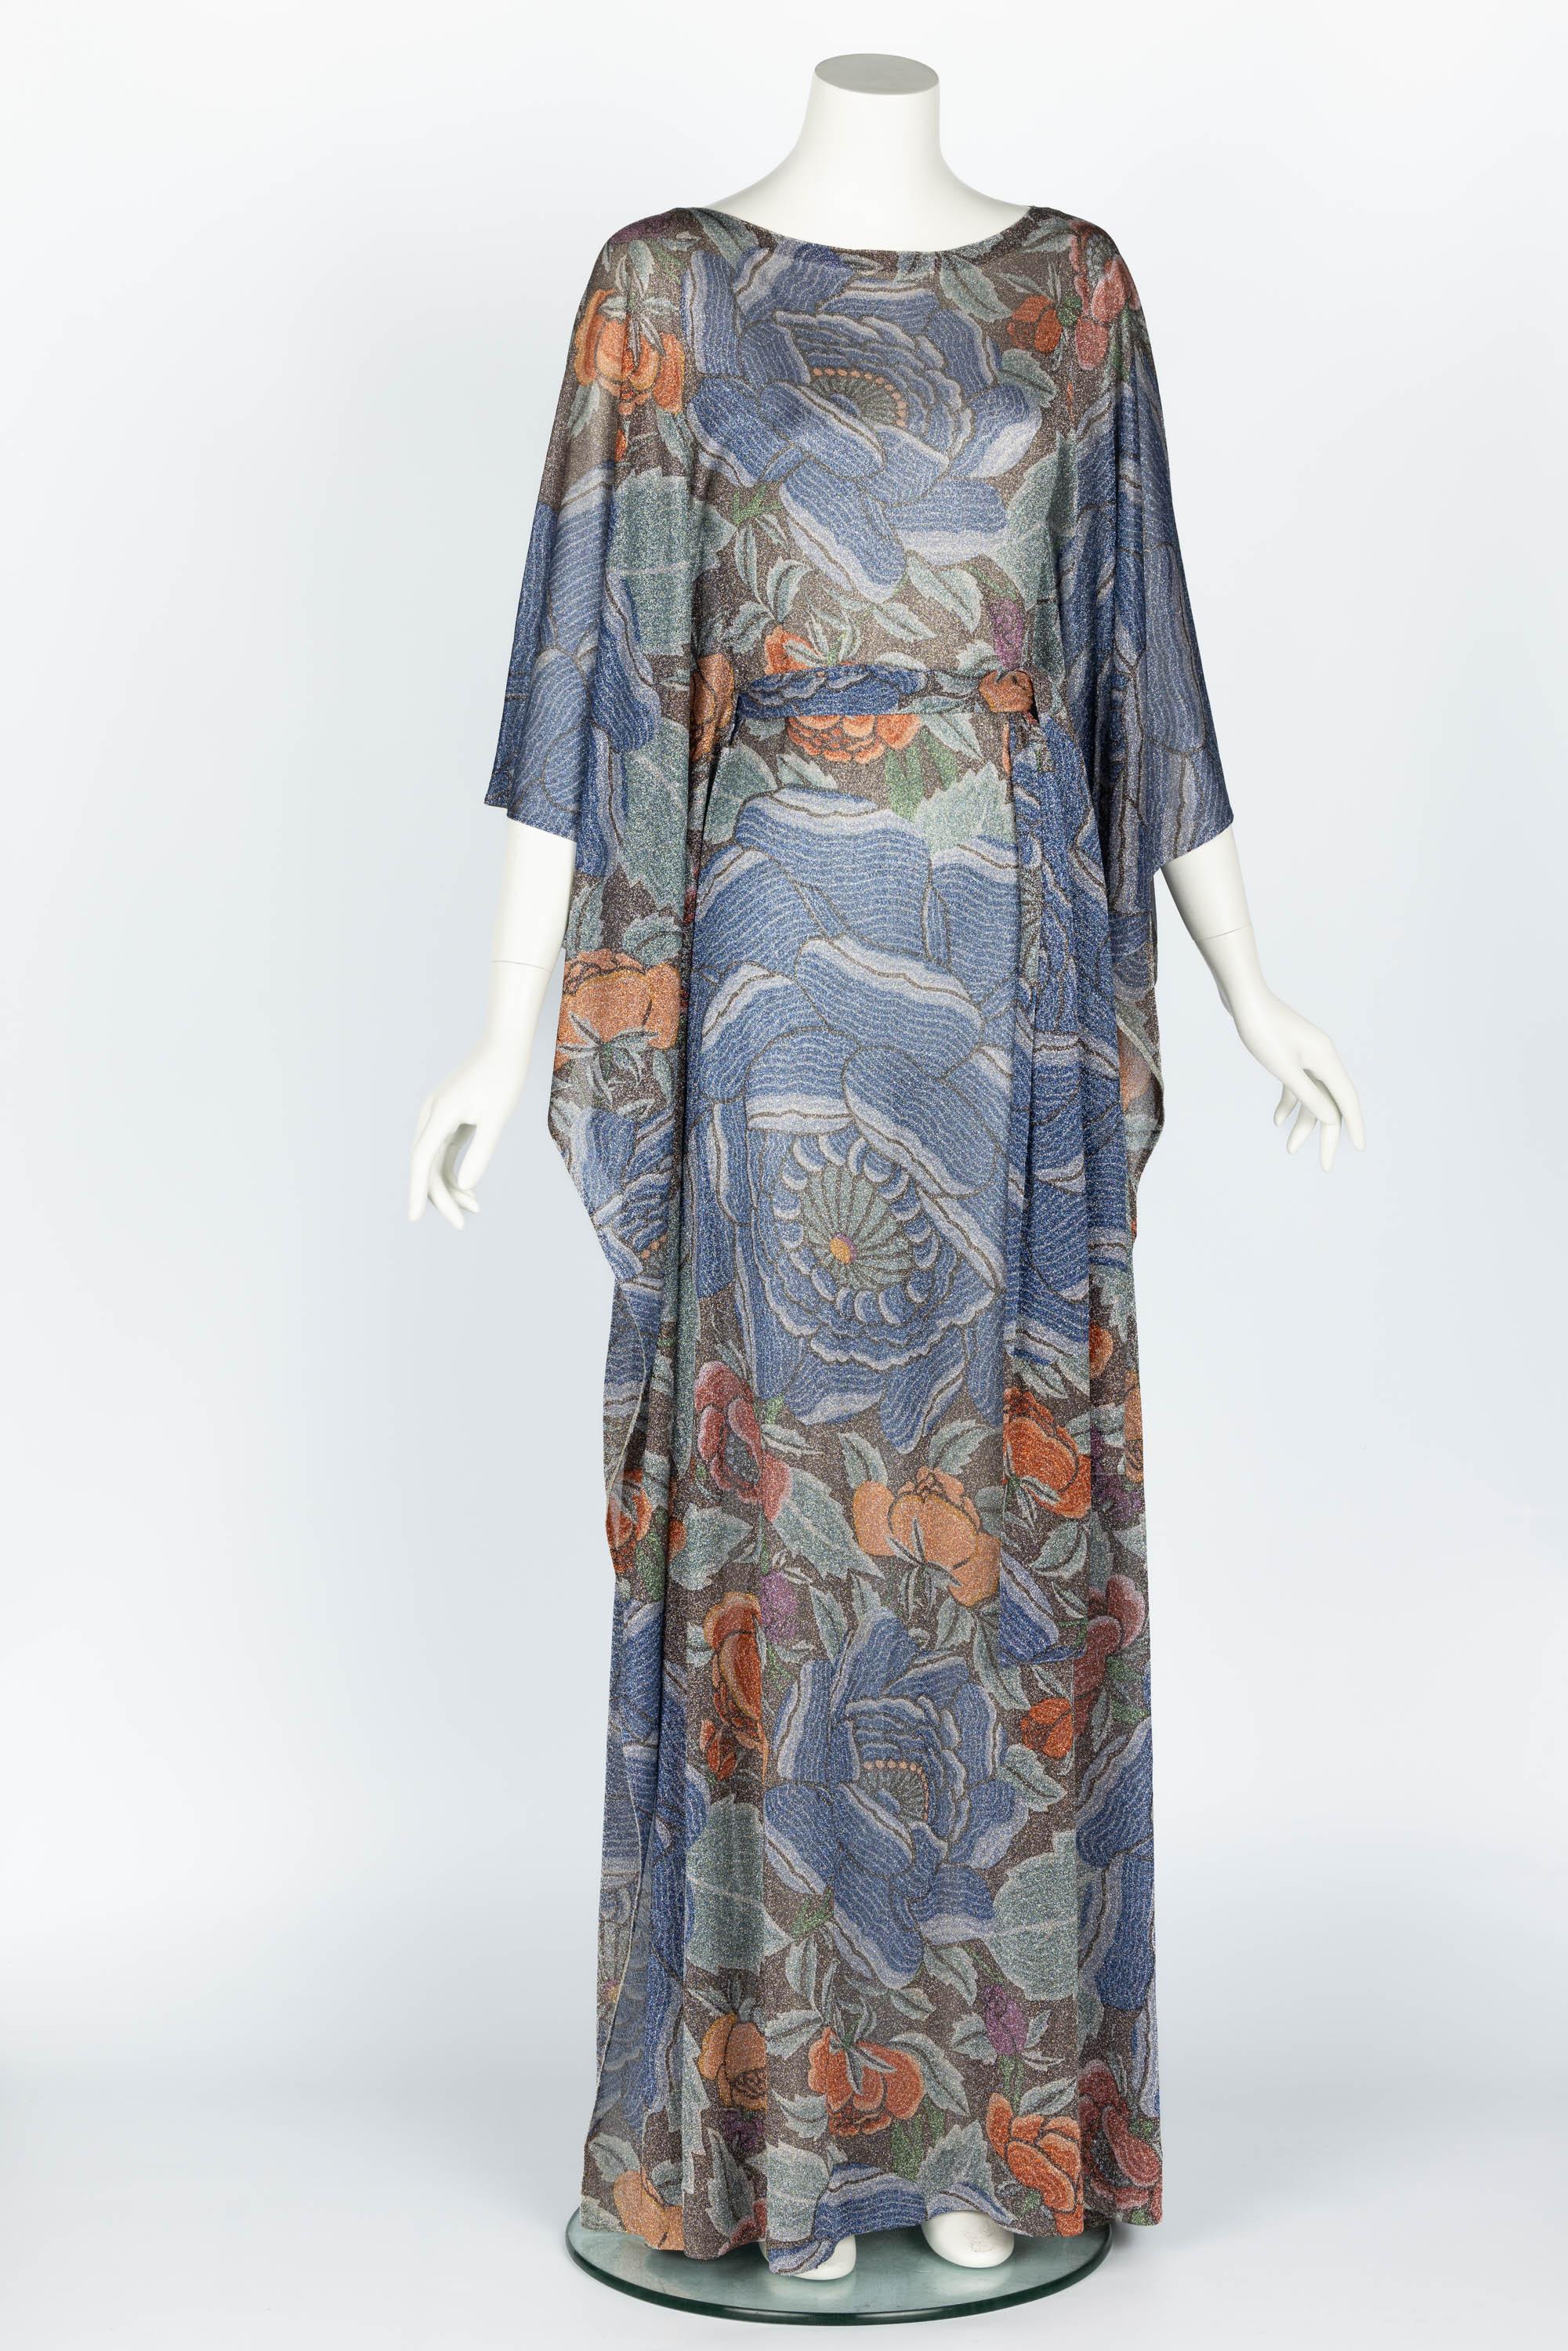 Women's or Men's Iconic Missoni 1970s Floral Print Metallic Lurex Caftan Dress  For Sale